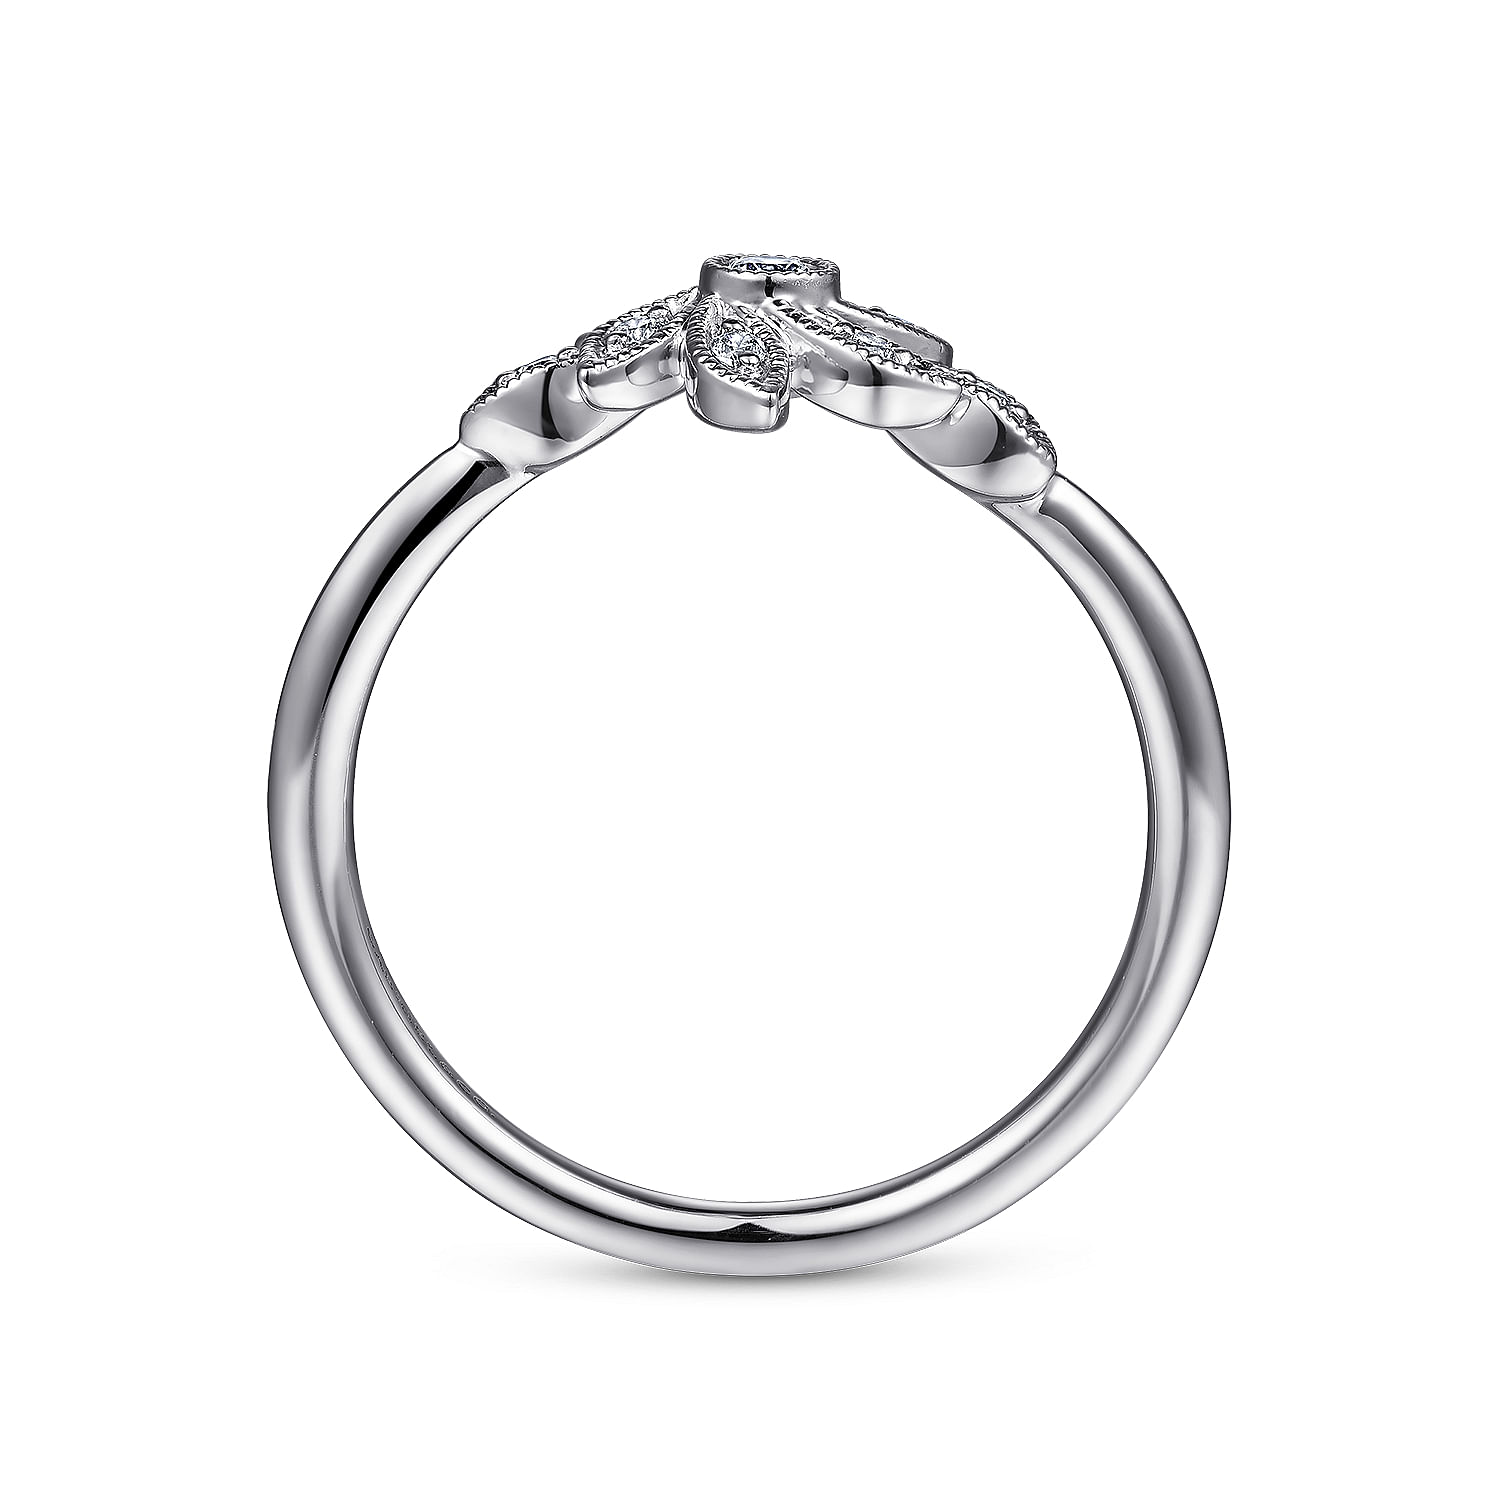 14K White Gold Floral Diamond Ring